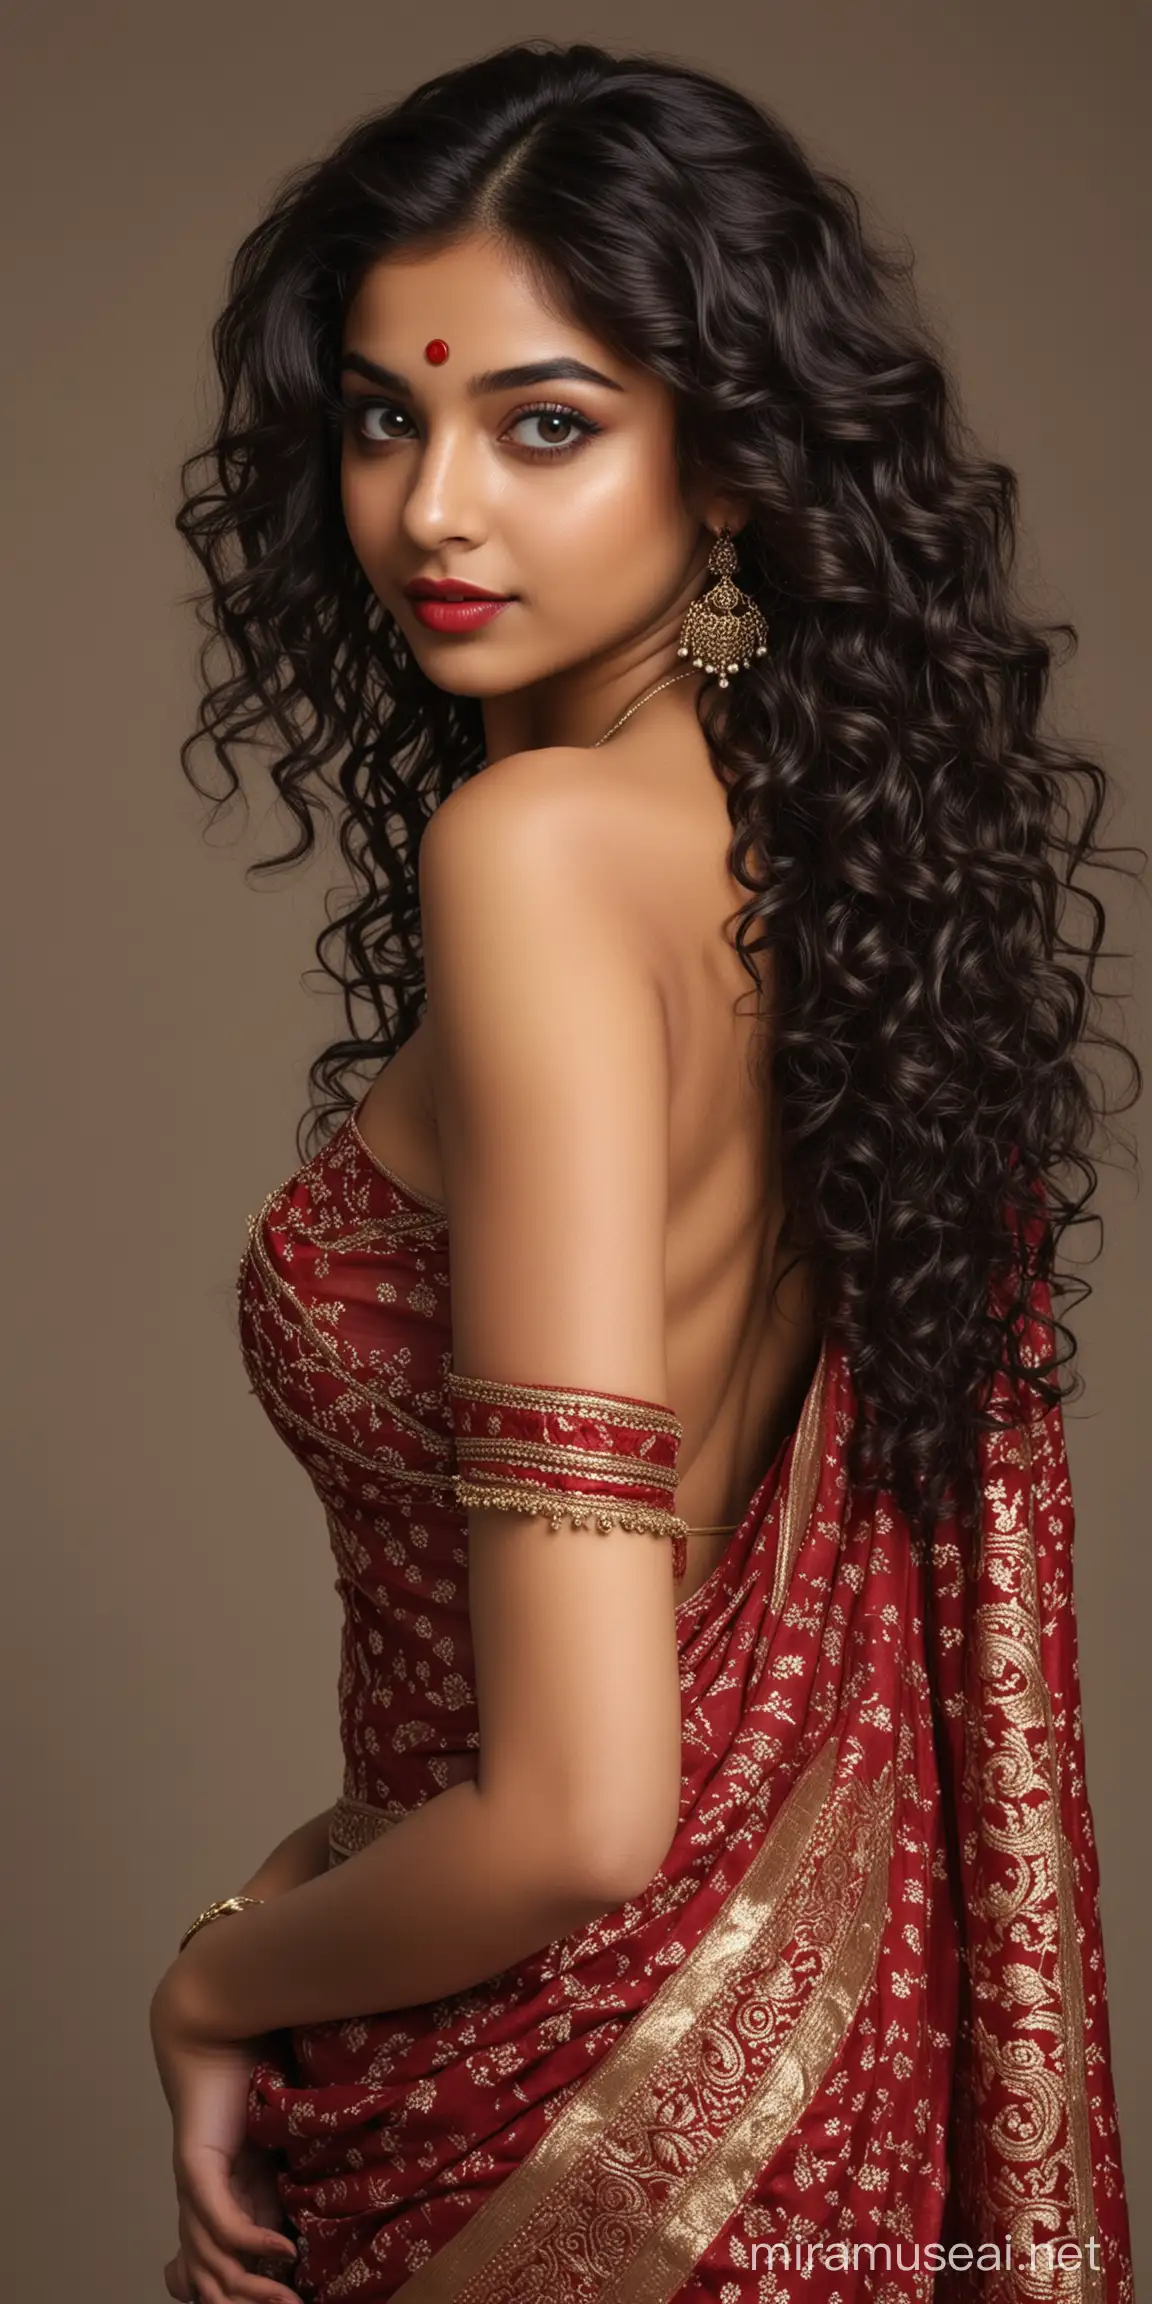 Captivating 16YearOld Indian Beauty in Elegant Saree Pose